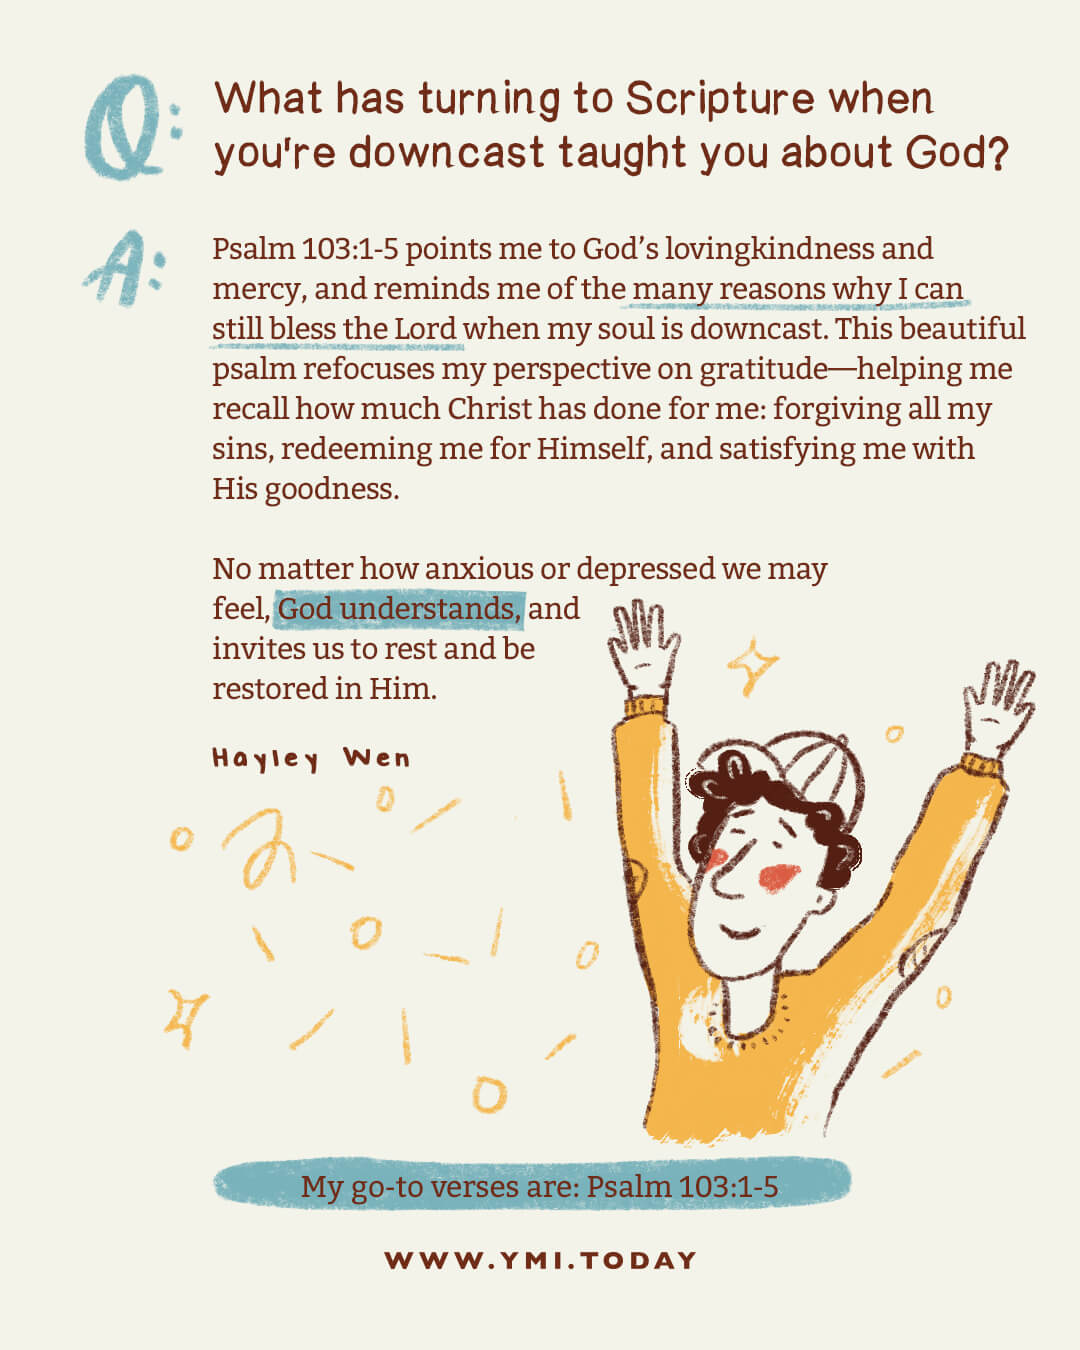 Illustration of man praising God